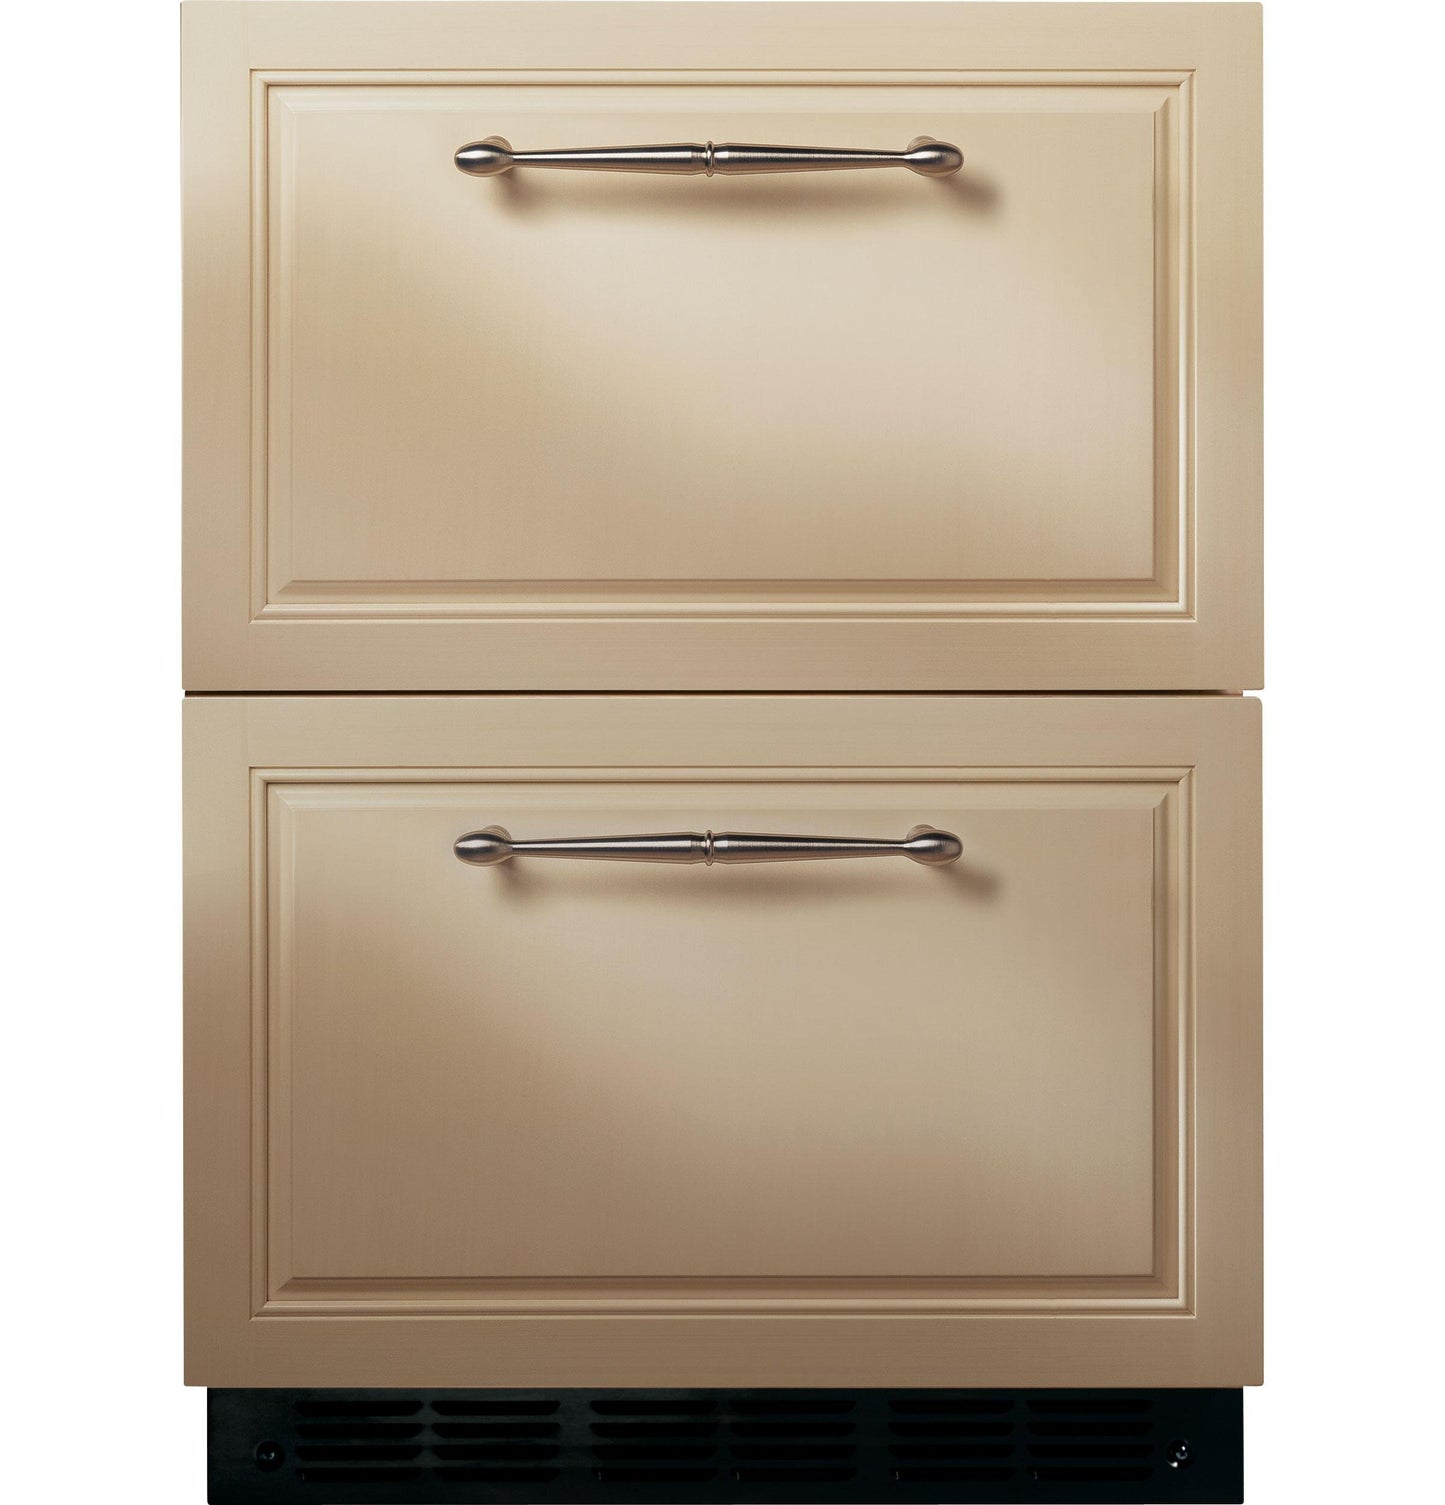 Monogram ZIDI240HII Monogram Double-Drawer Refrigerator Module